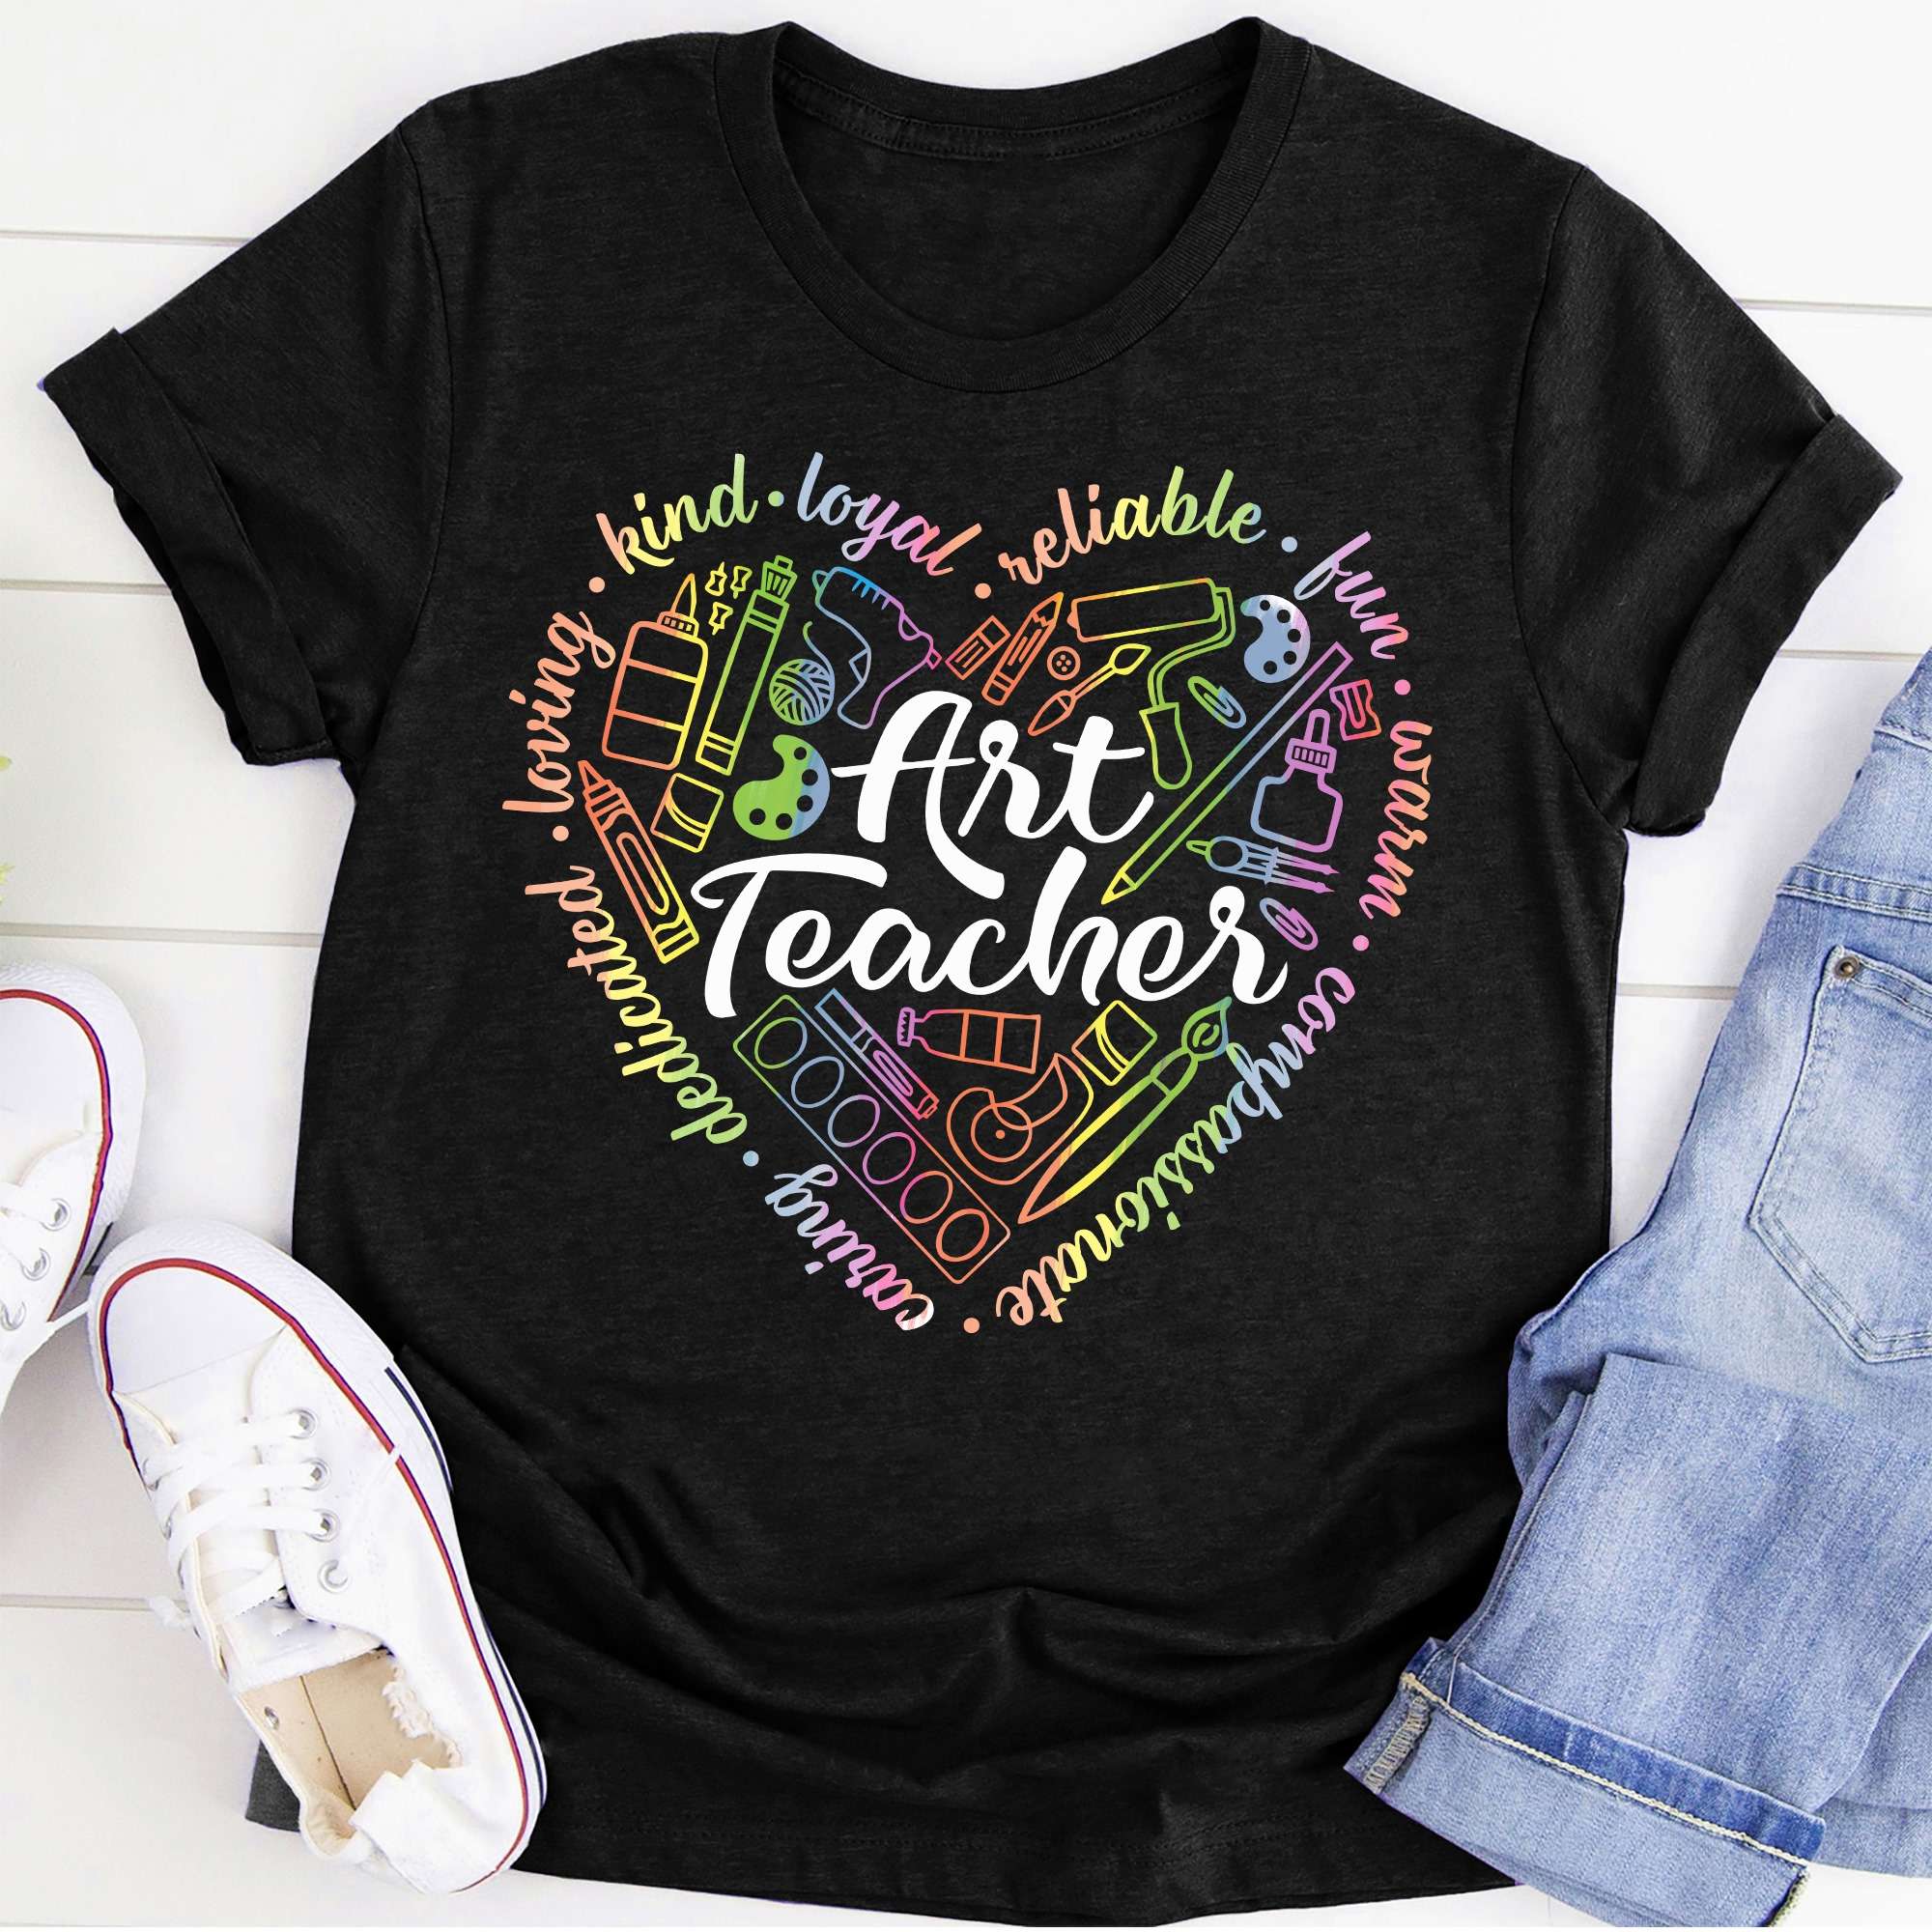 Art Teacher - Caring dedicated loving kind loyal reliable fun warm compassionate